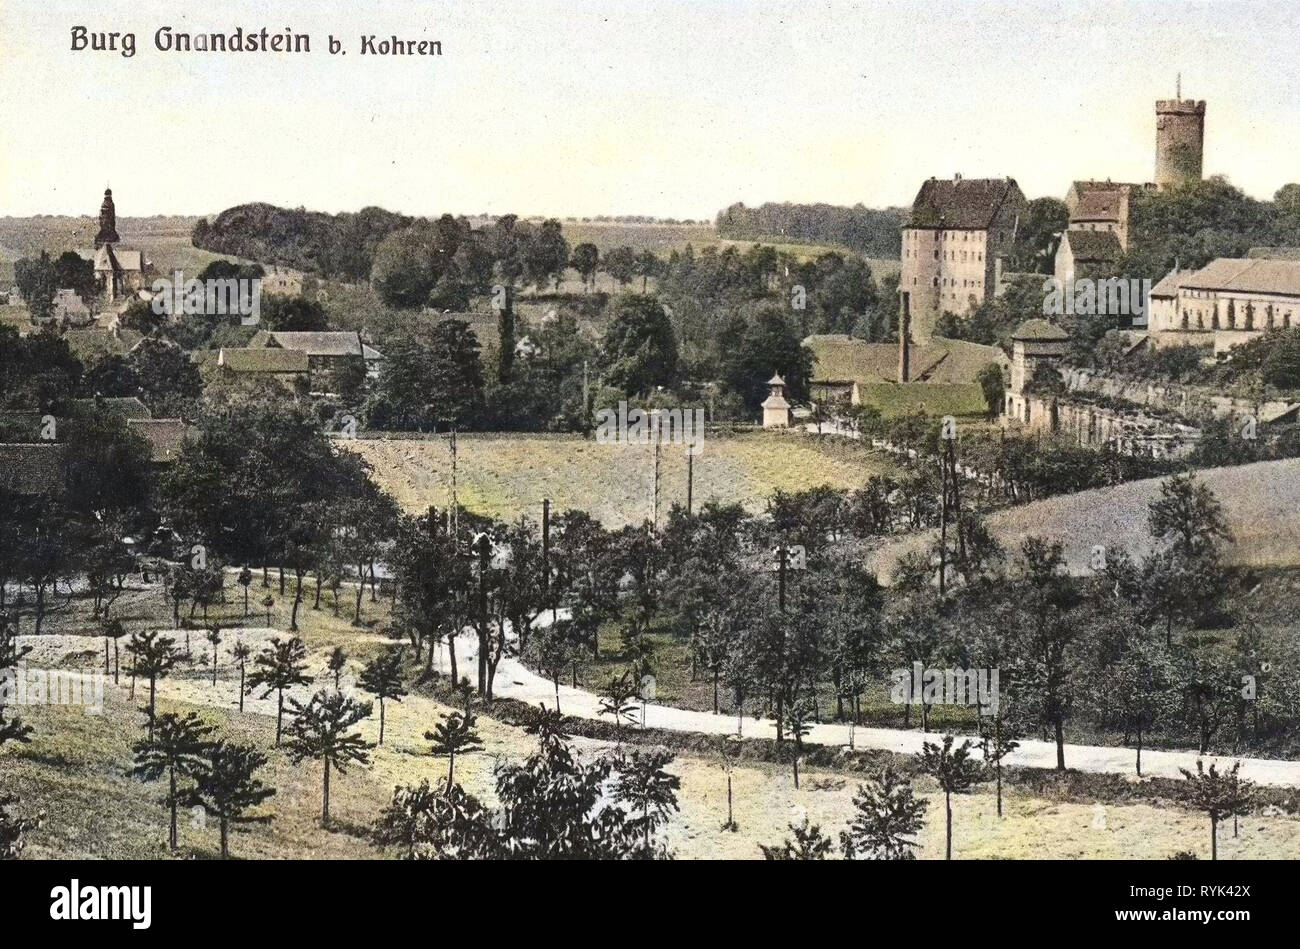 Burg Gnandstein, 1914, Landkreis Leipzig, Kohren, Germany Stock Photo